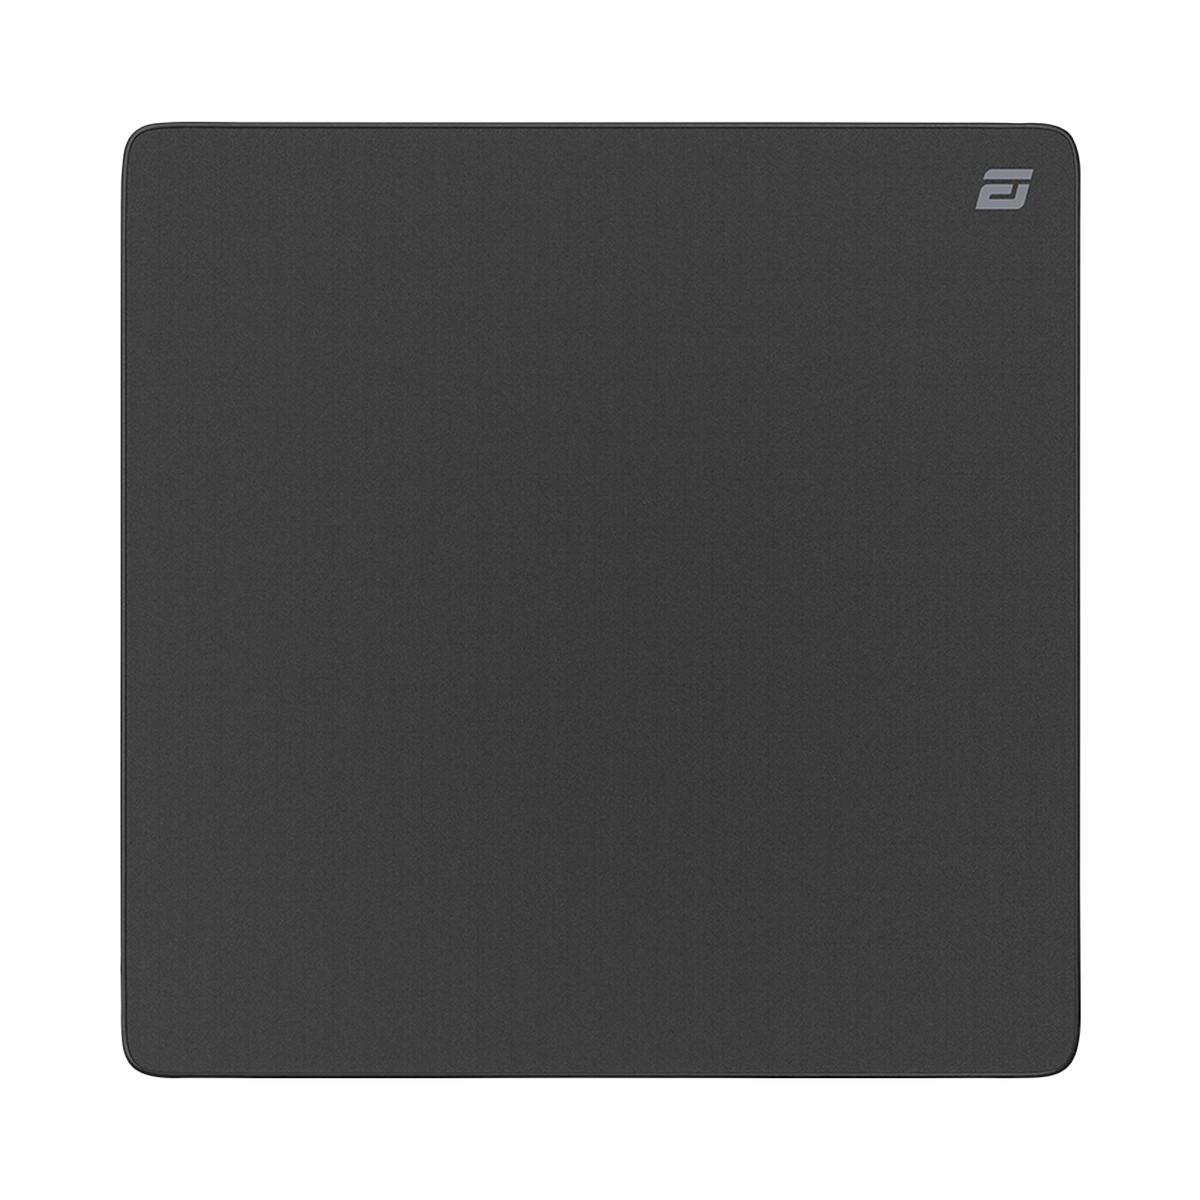 Endgame Gear - Endgame Gear EM-C Plus XL Poron Gaming Surface 500x500x3mm (EGG-EMC-500-BLK)